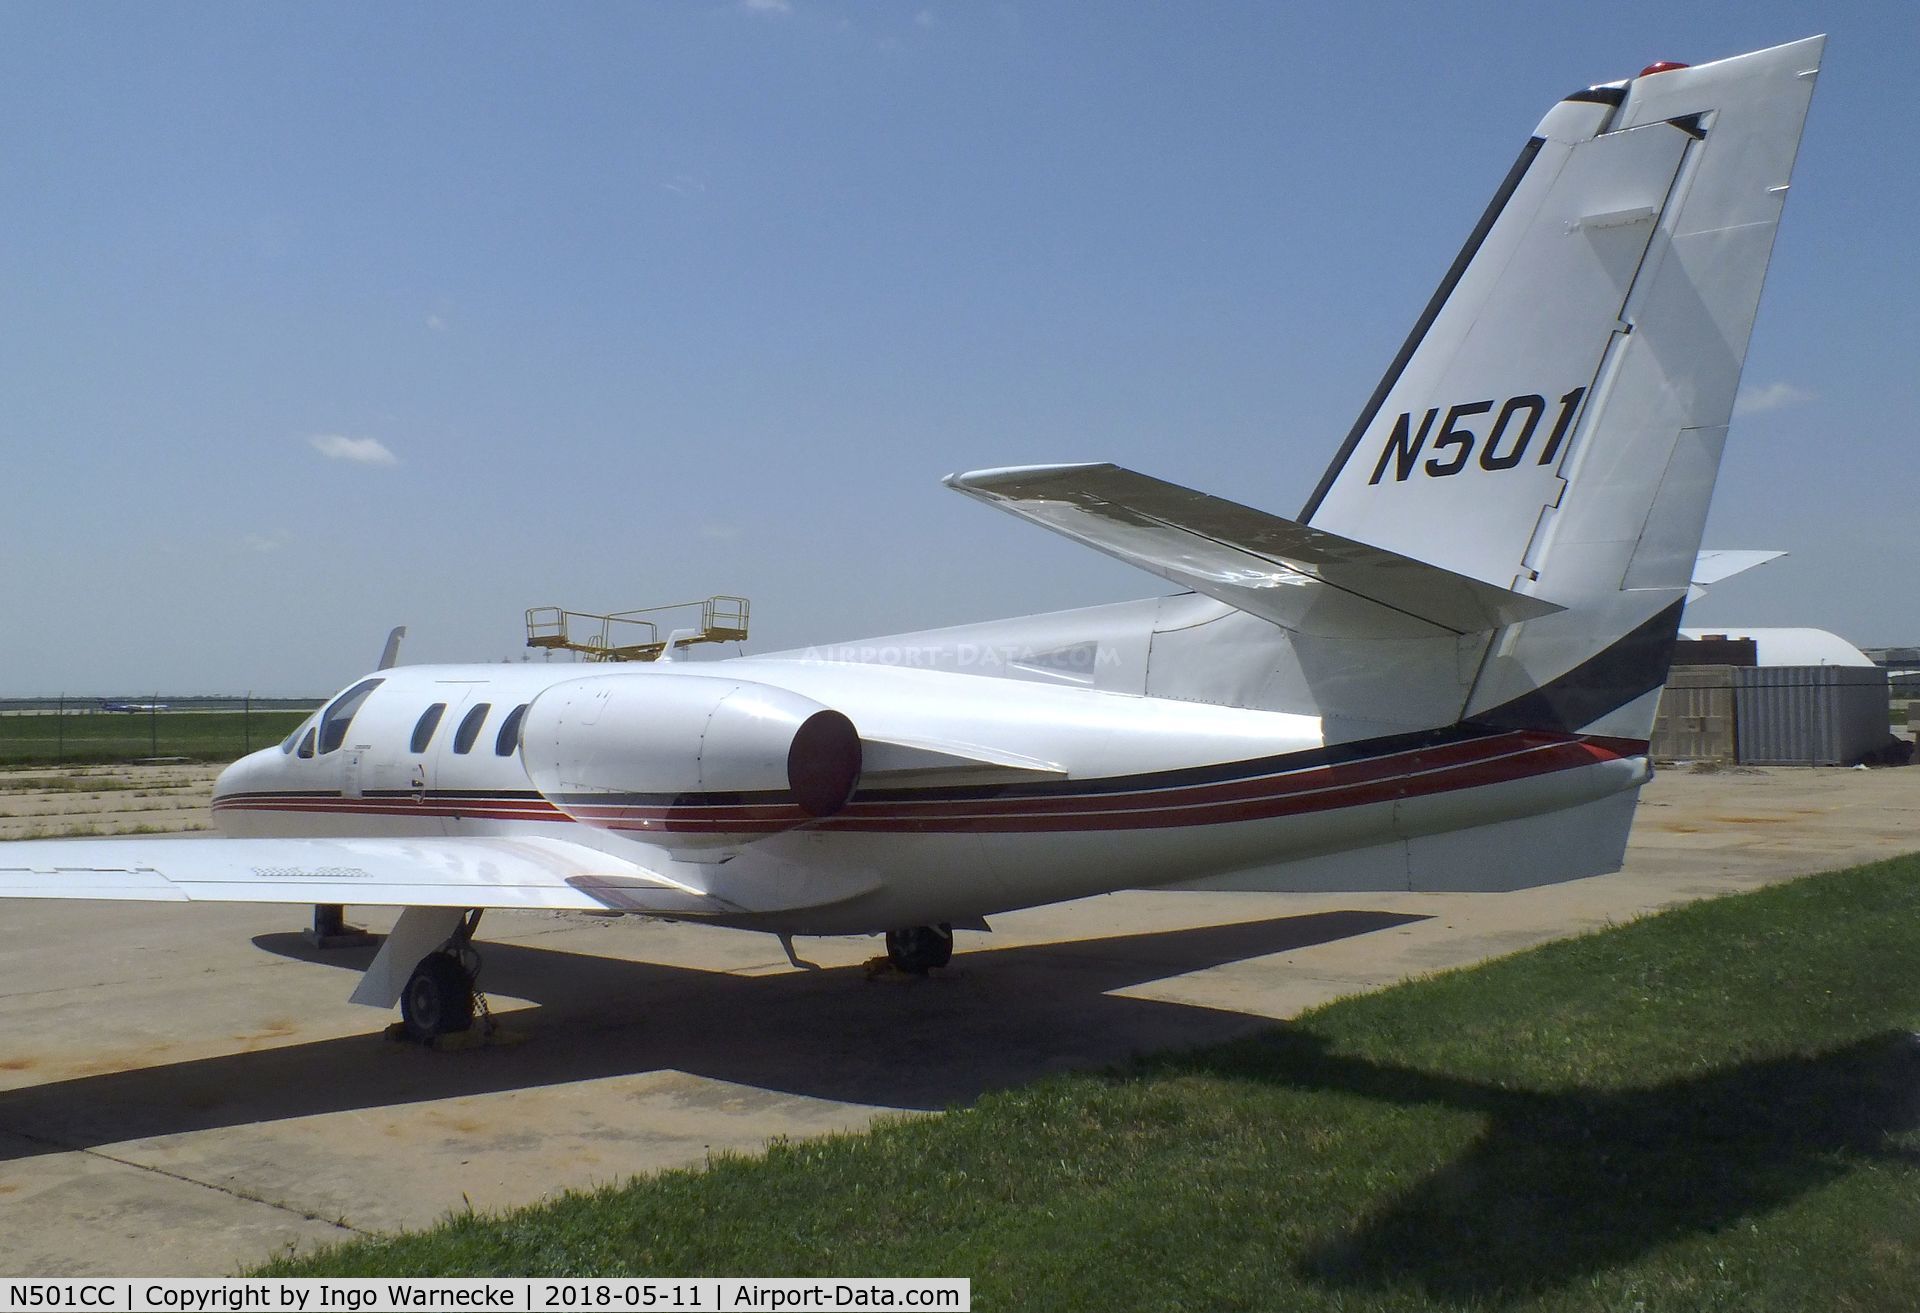 N501CC, 1969 Cessna 501 C/N 701, Cessna 501 Citation at the Kansas Aviation Museum, Wichita KS